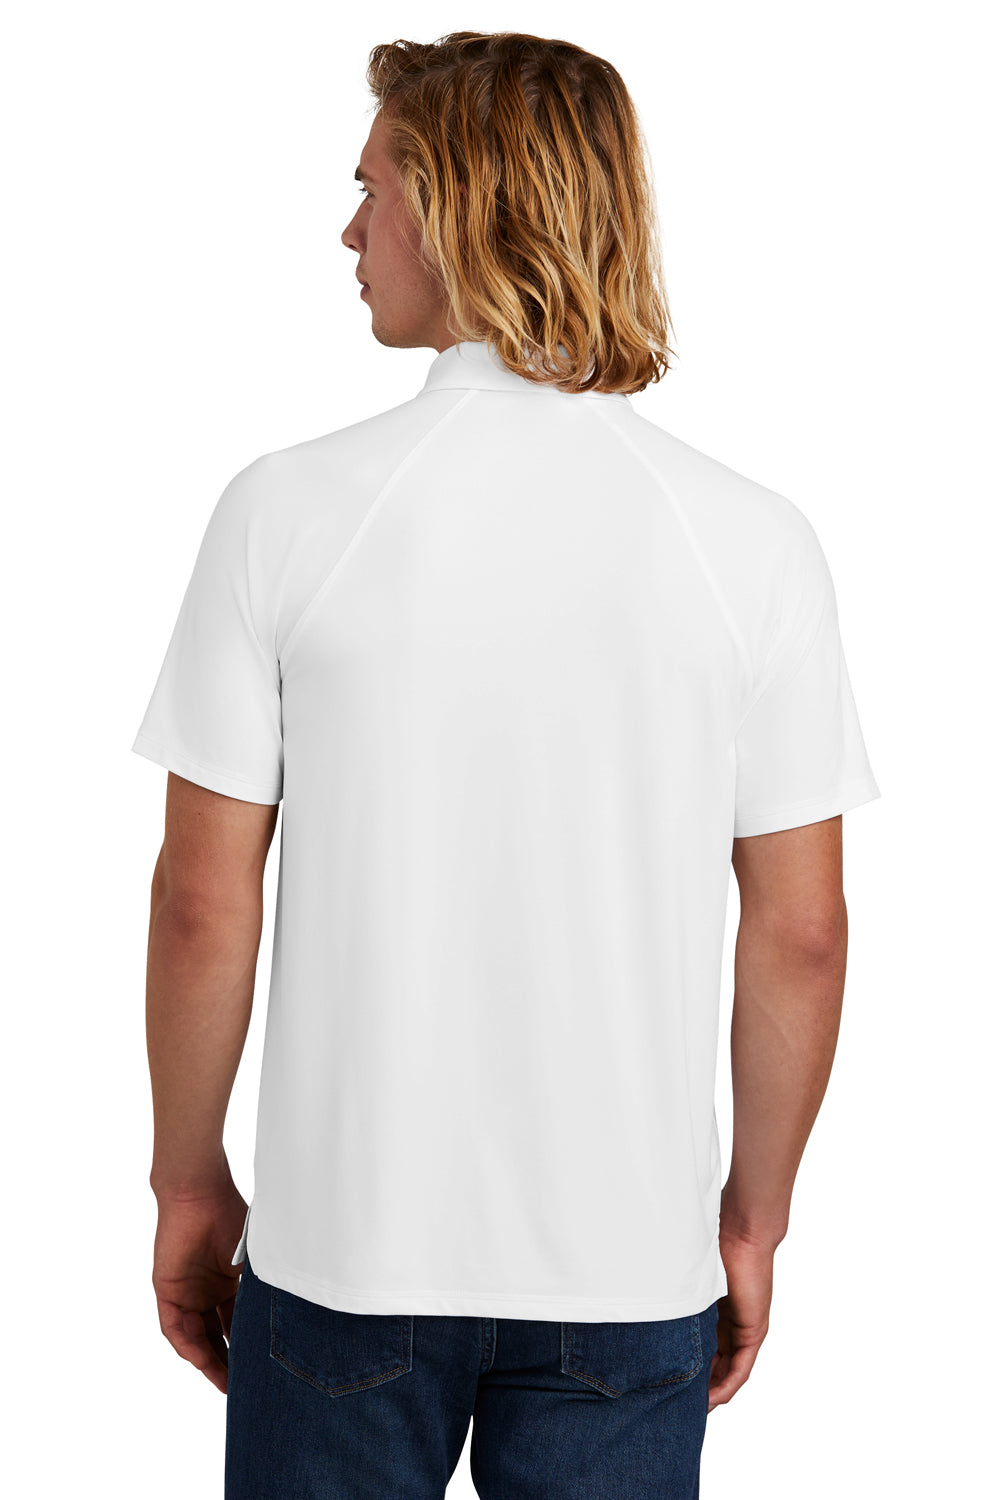 New Era Mens Power Short Sleeve Polo Shirt White Back